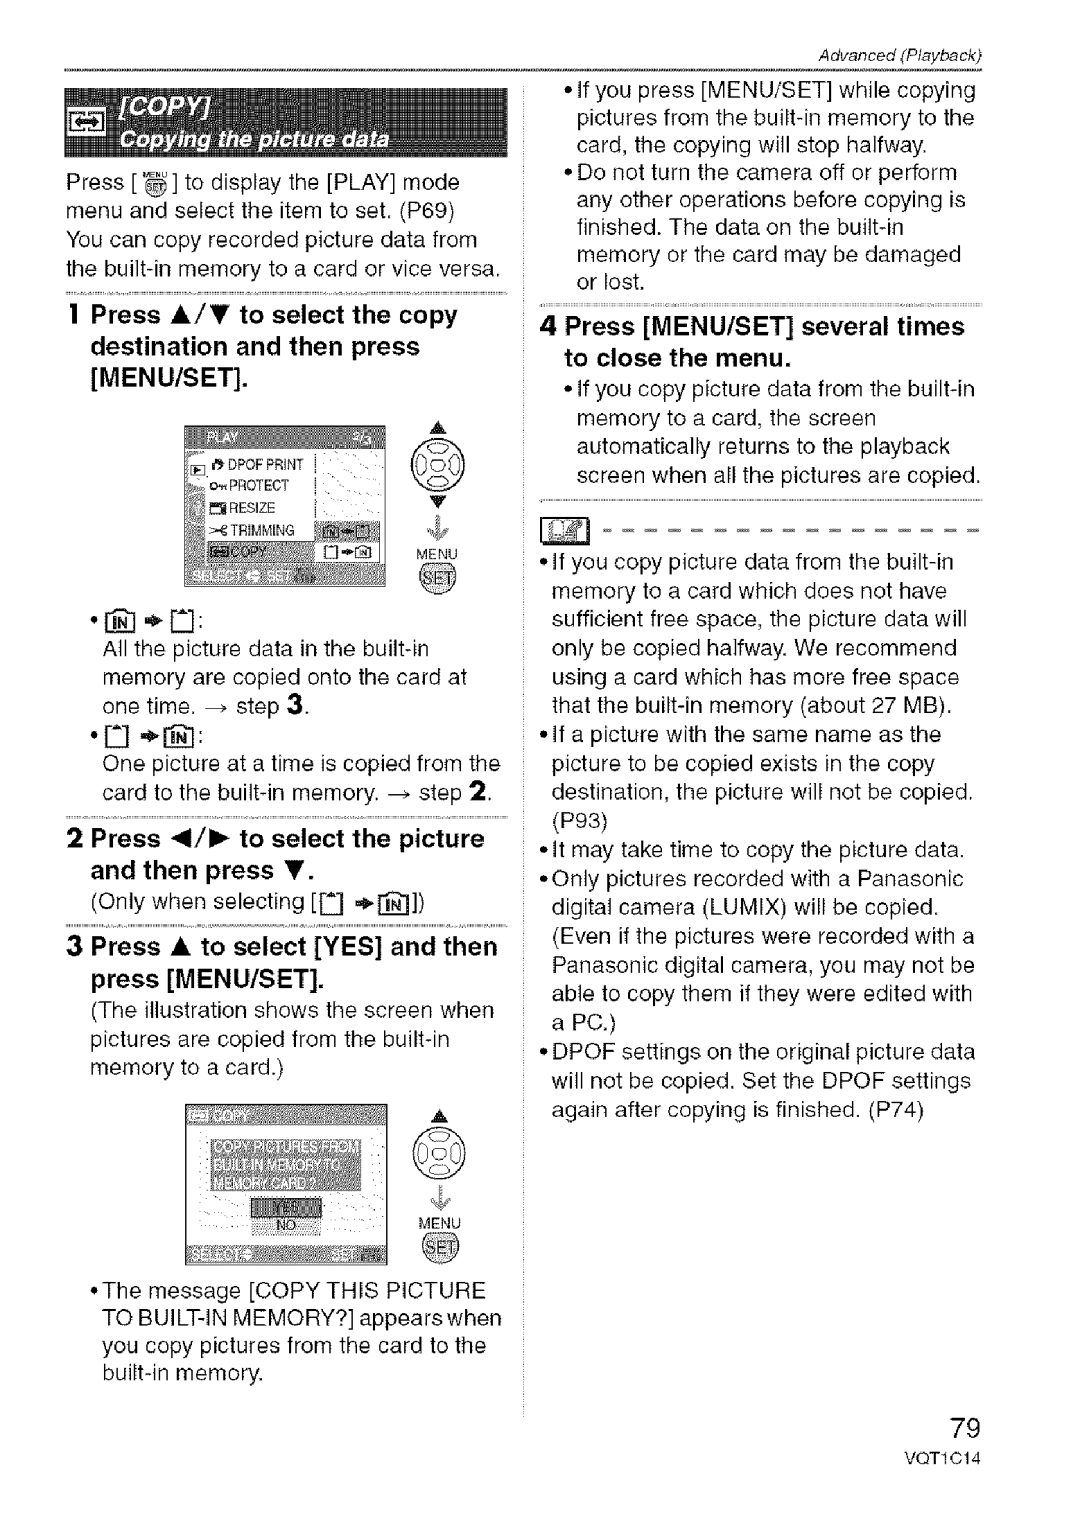 Panasonic DMC-FX10, DMC-FX12 operating instructions Press / to select the copy Destination and then press, Menu/Set 